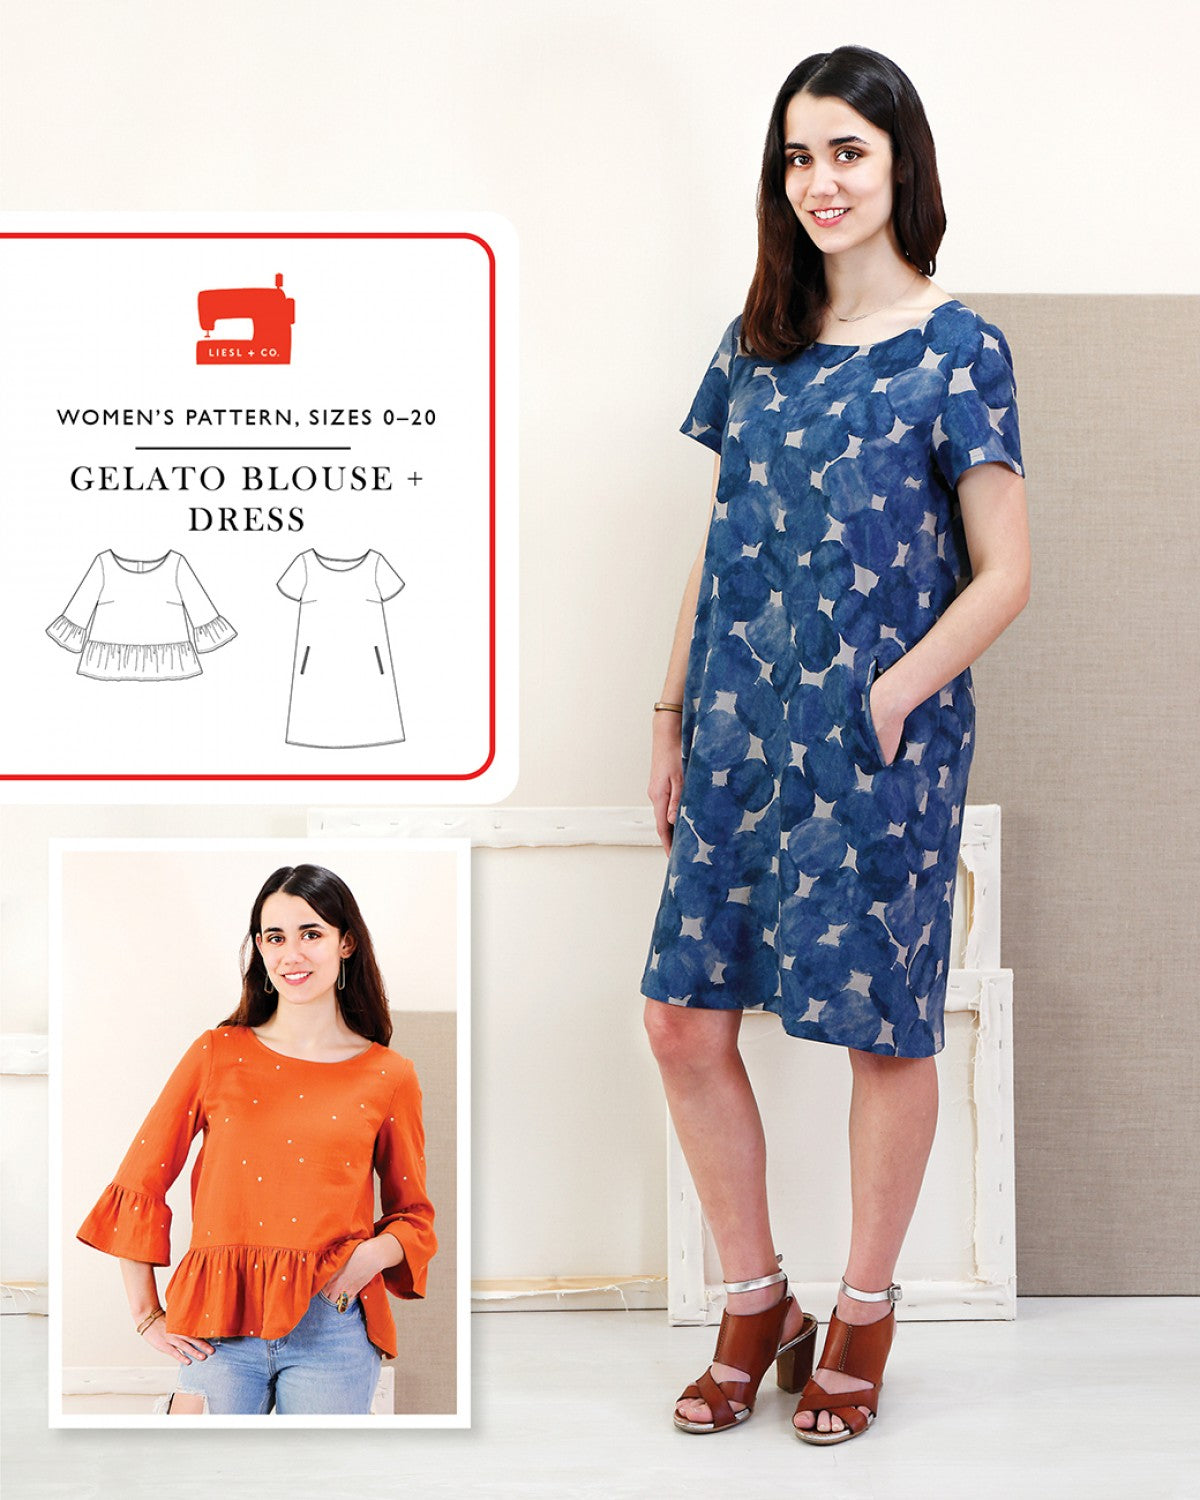 Introducing the Enmore Halter Dress + Top Pattern, Blog